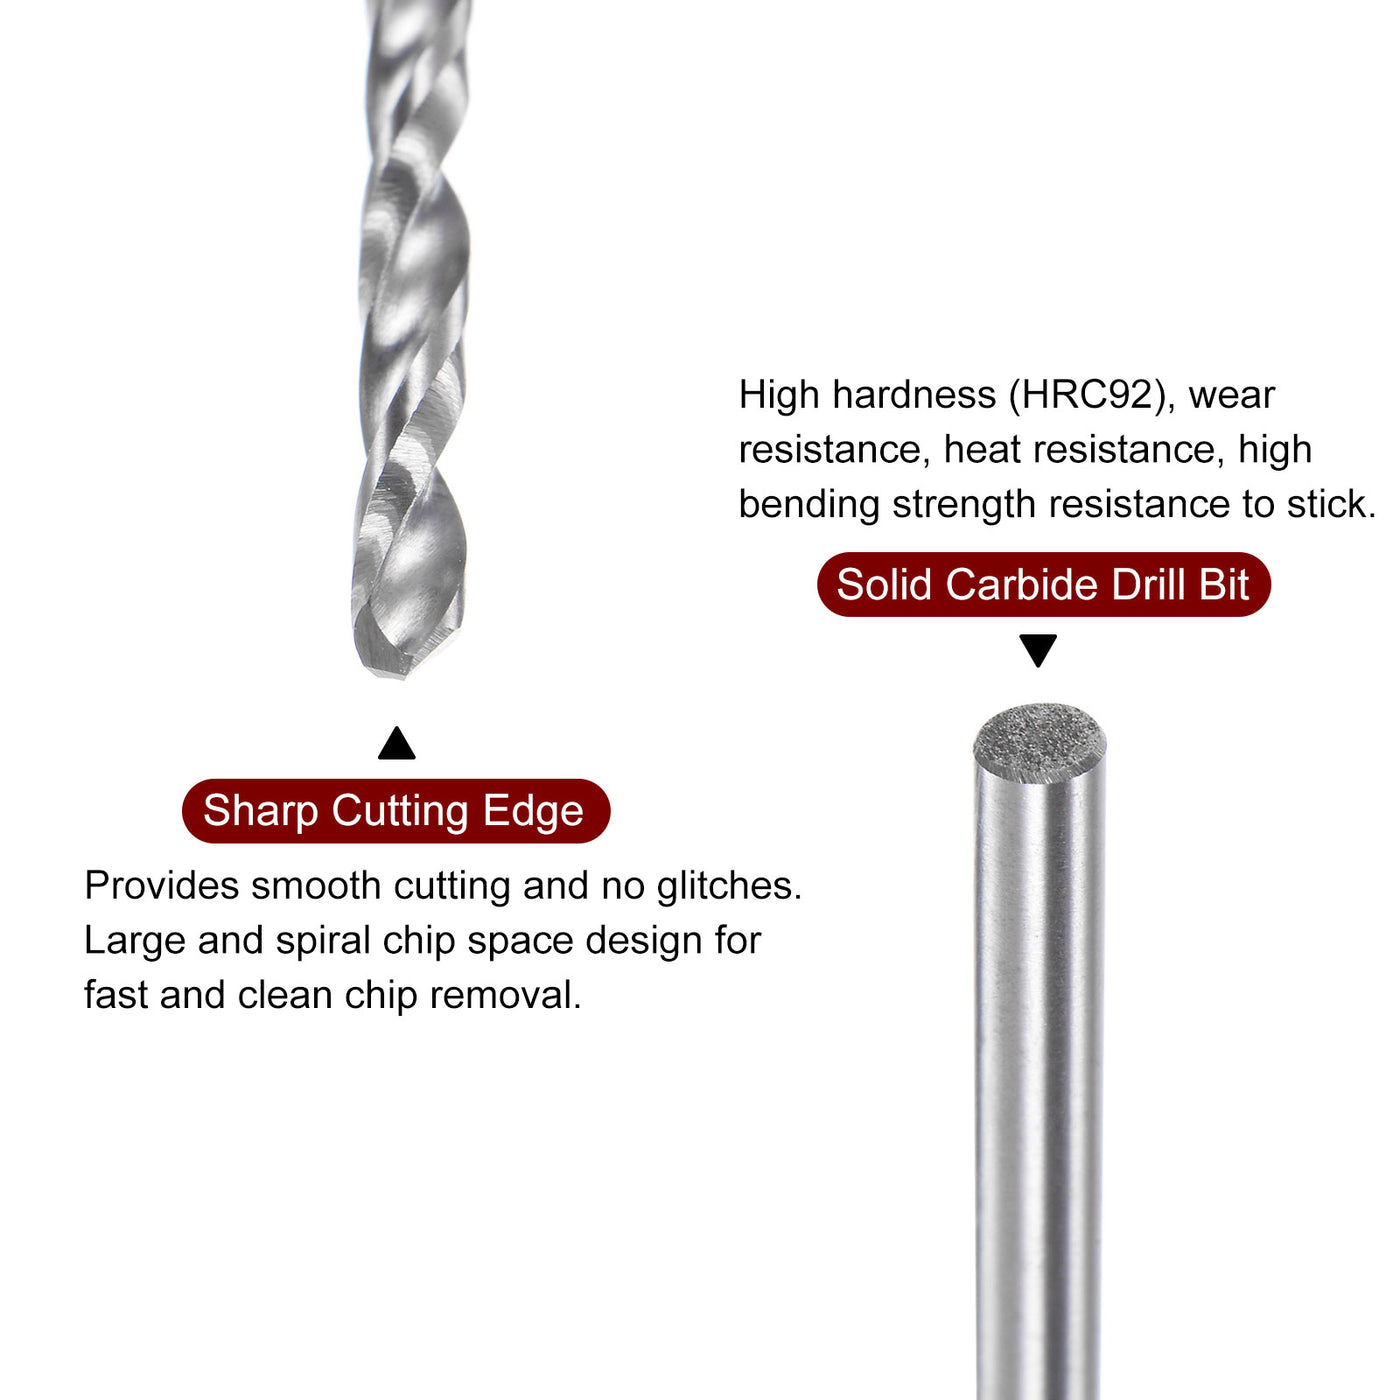 Harfington 4pcs 1.95mm C3/K10 Tungsten Carbide Precision Straight Shank Twist Drill Bit